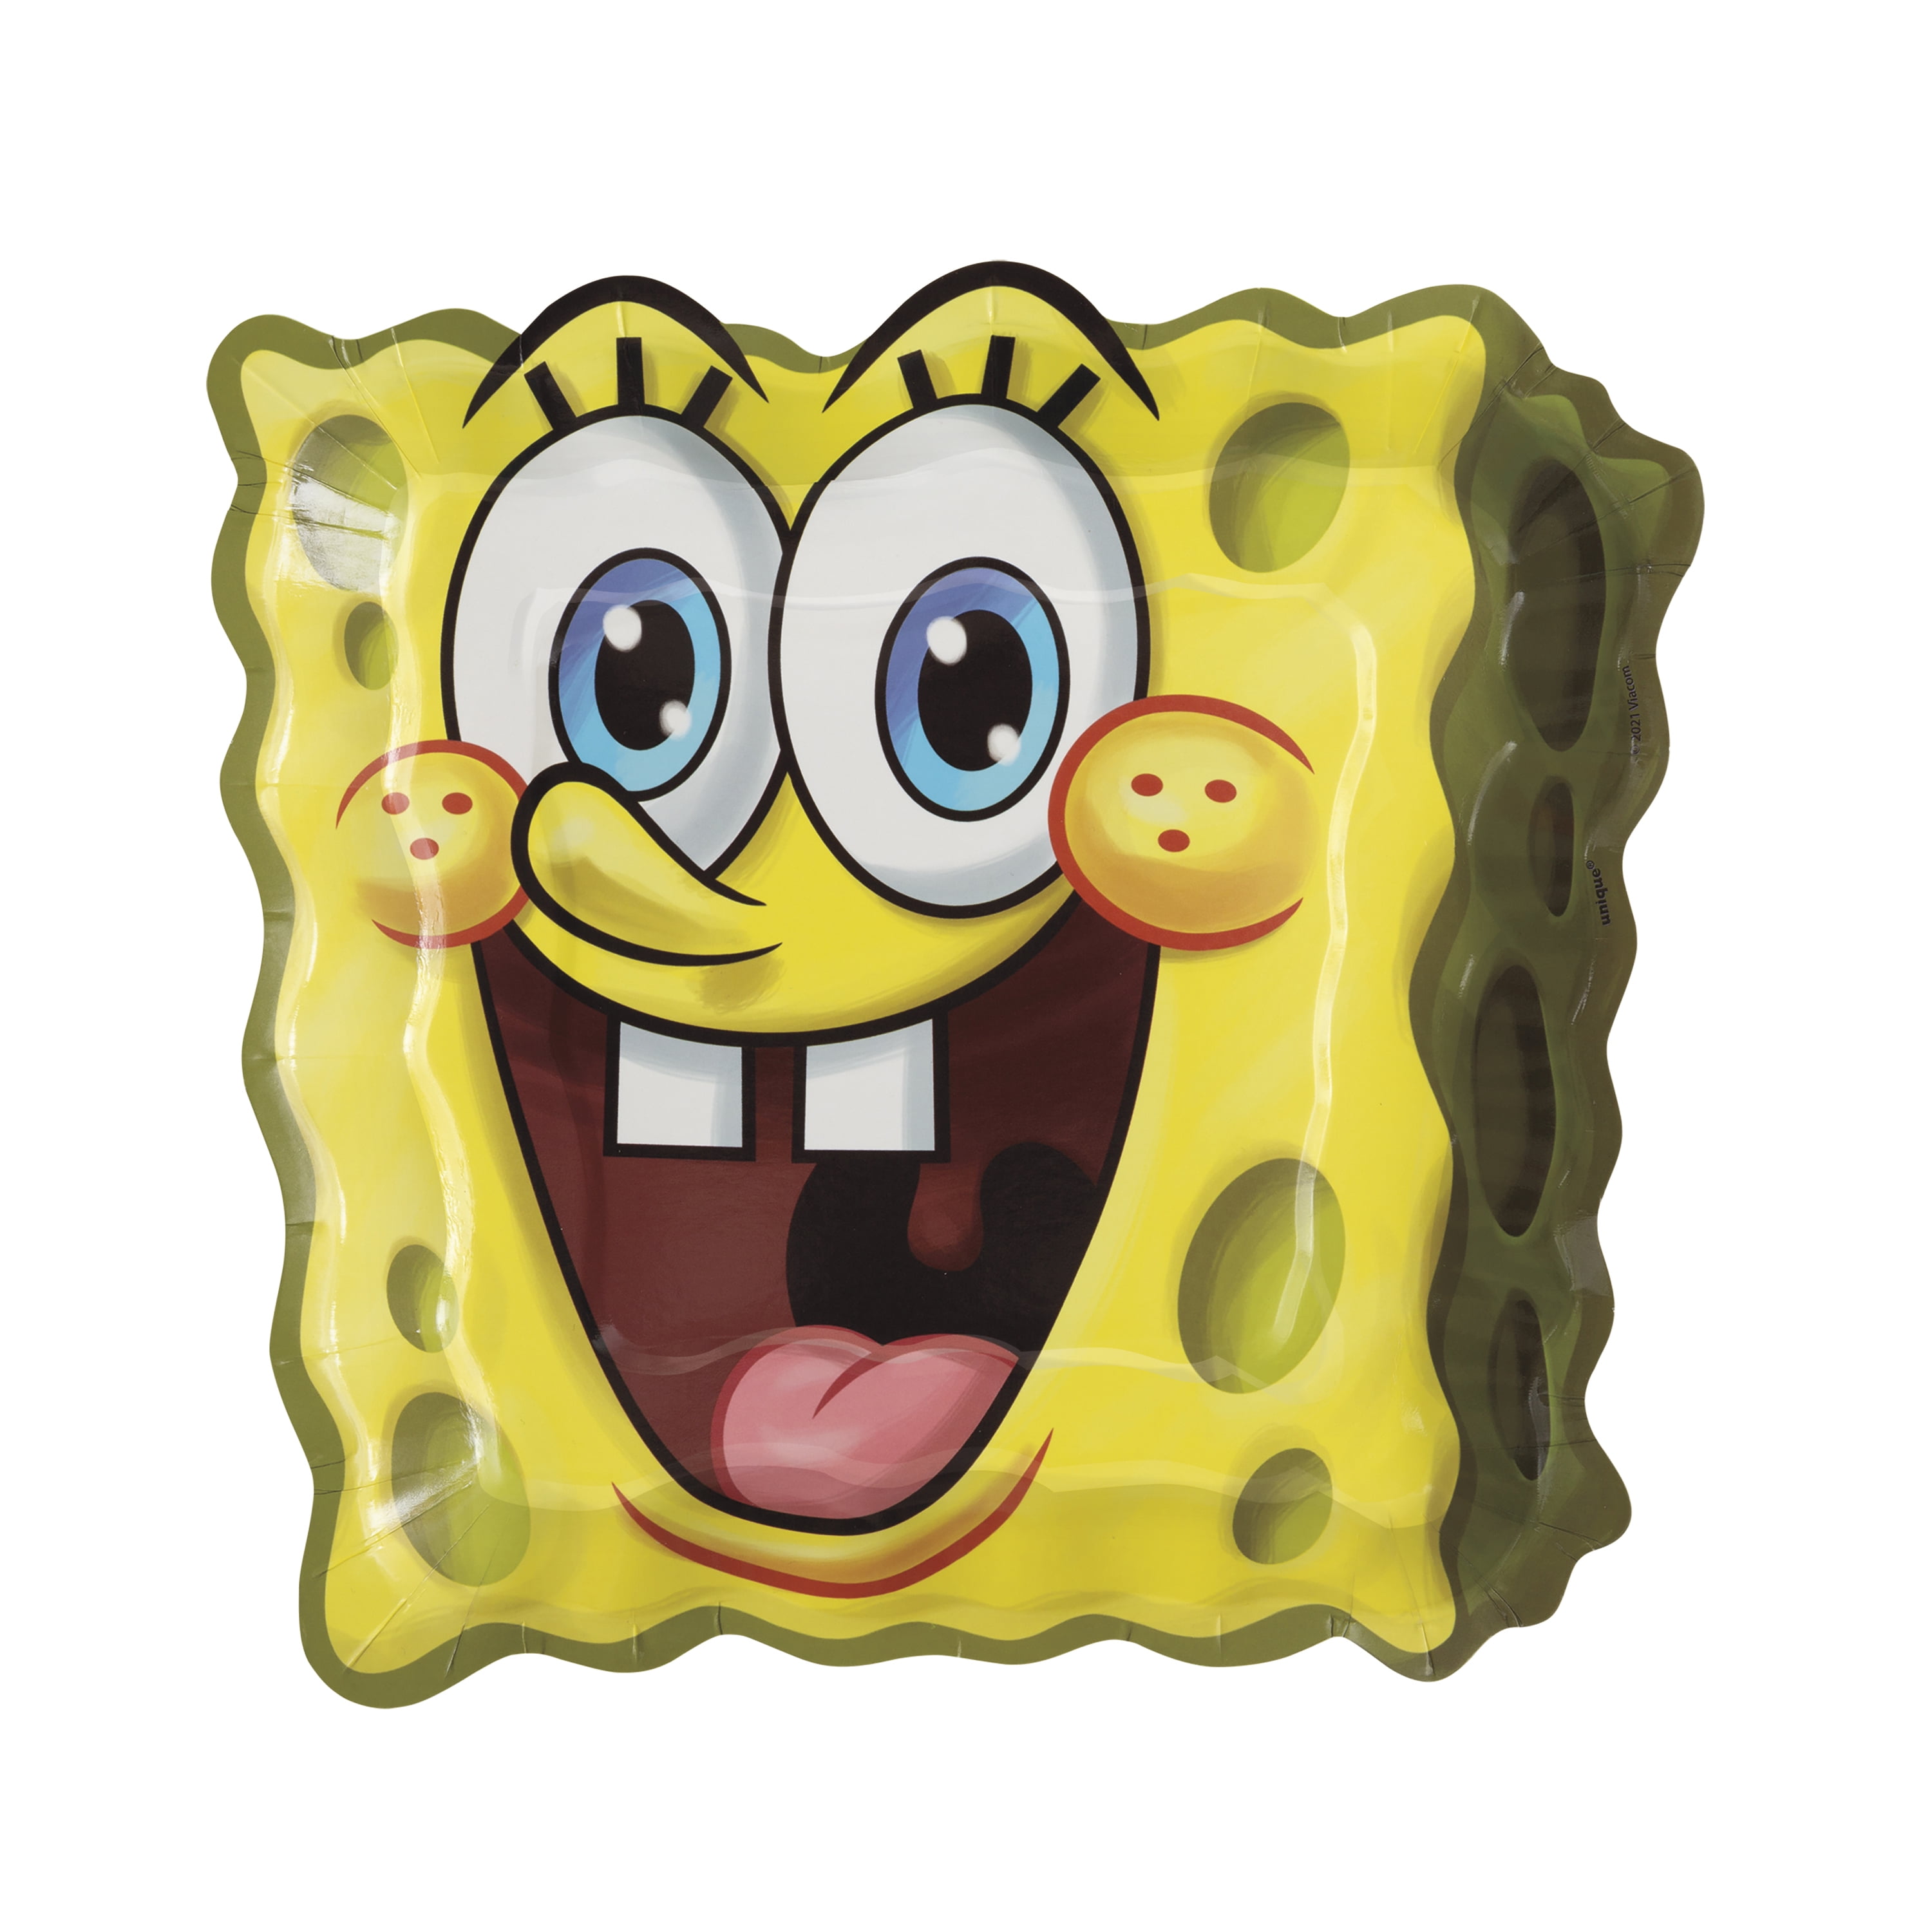 Spongebob Squarepants Stickers Decal Sheet 6.5" x 4" Nickelodeon NEW